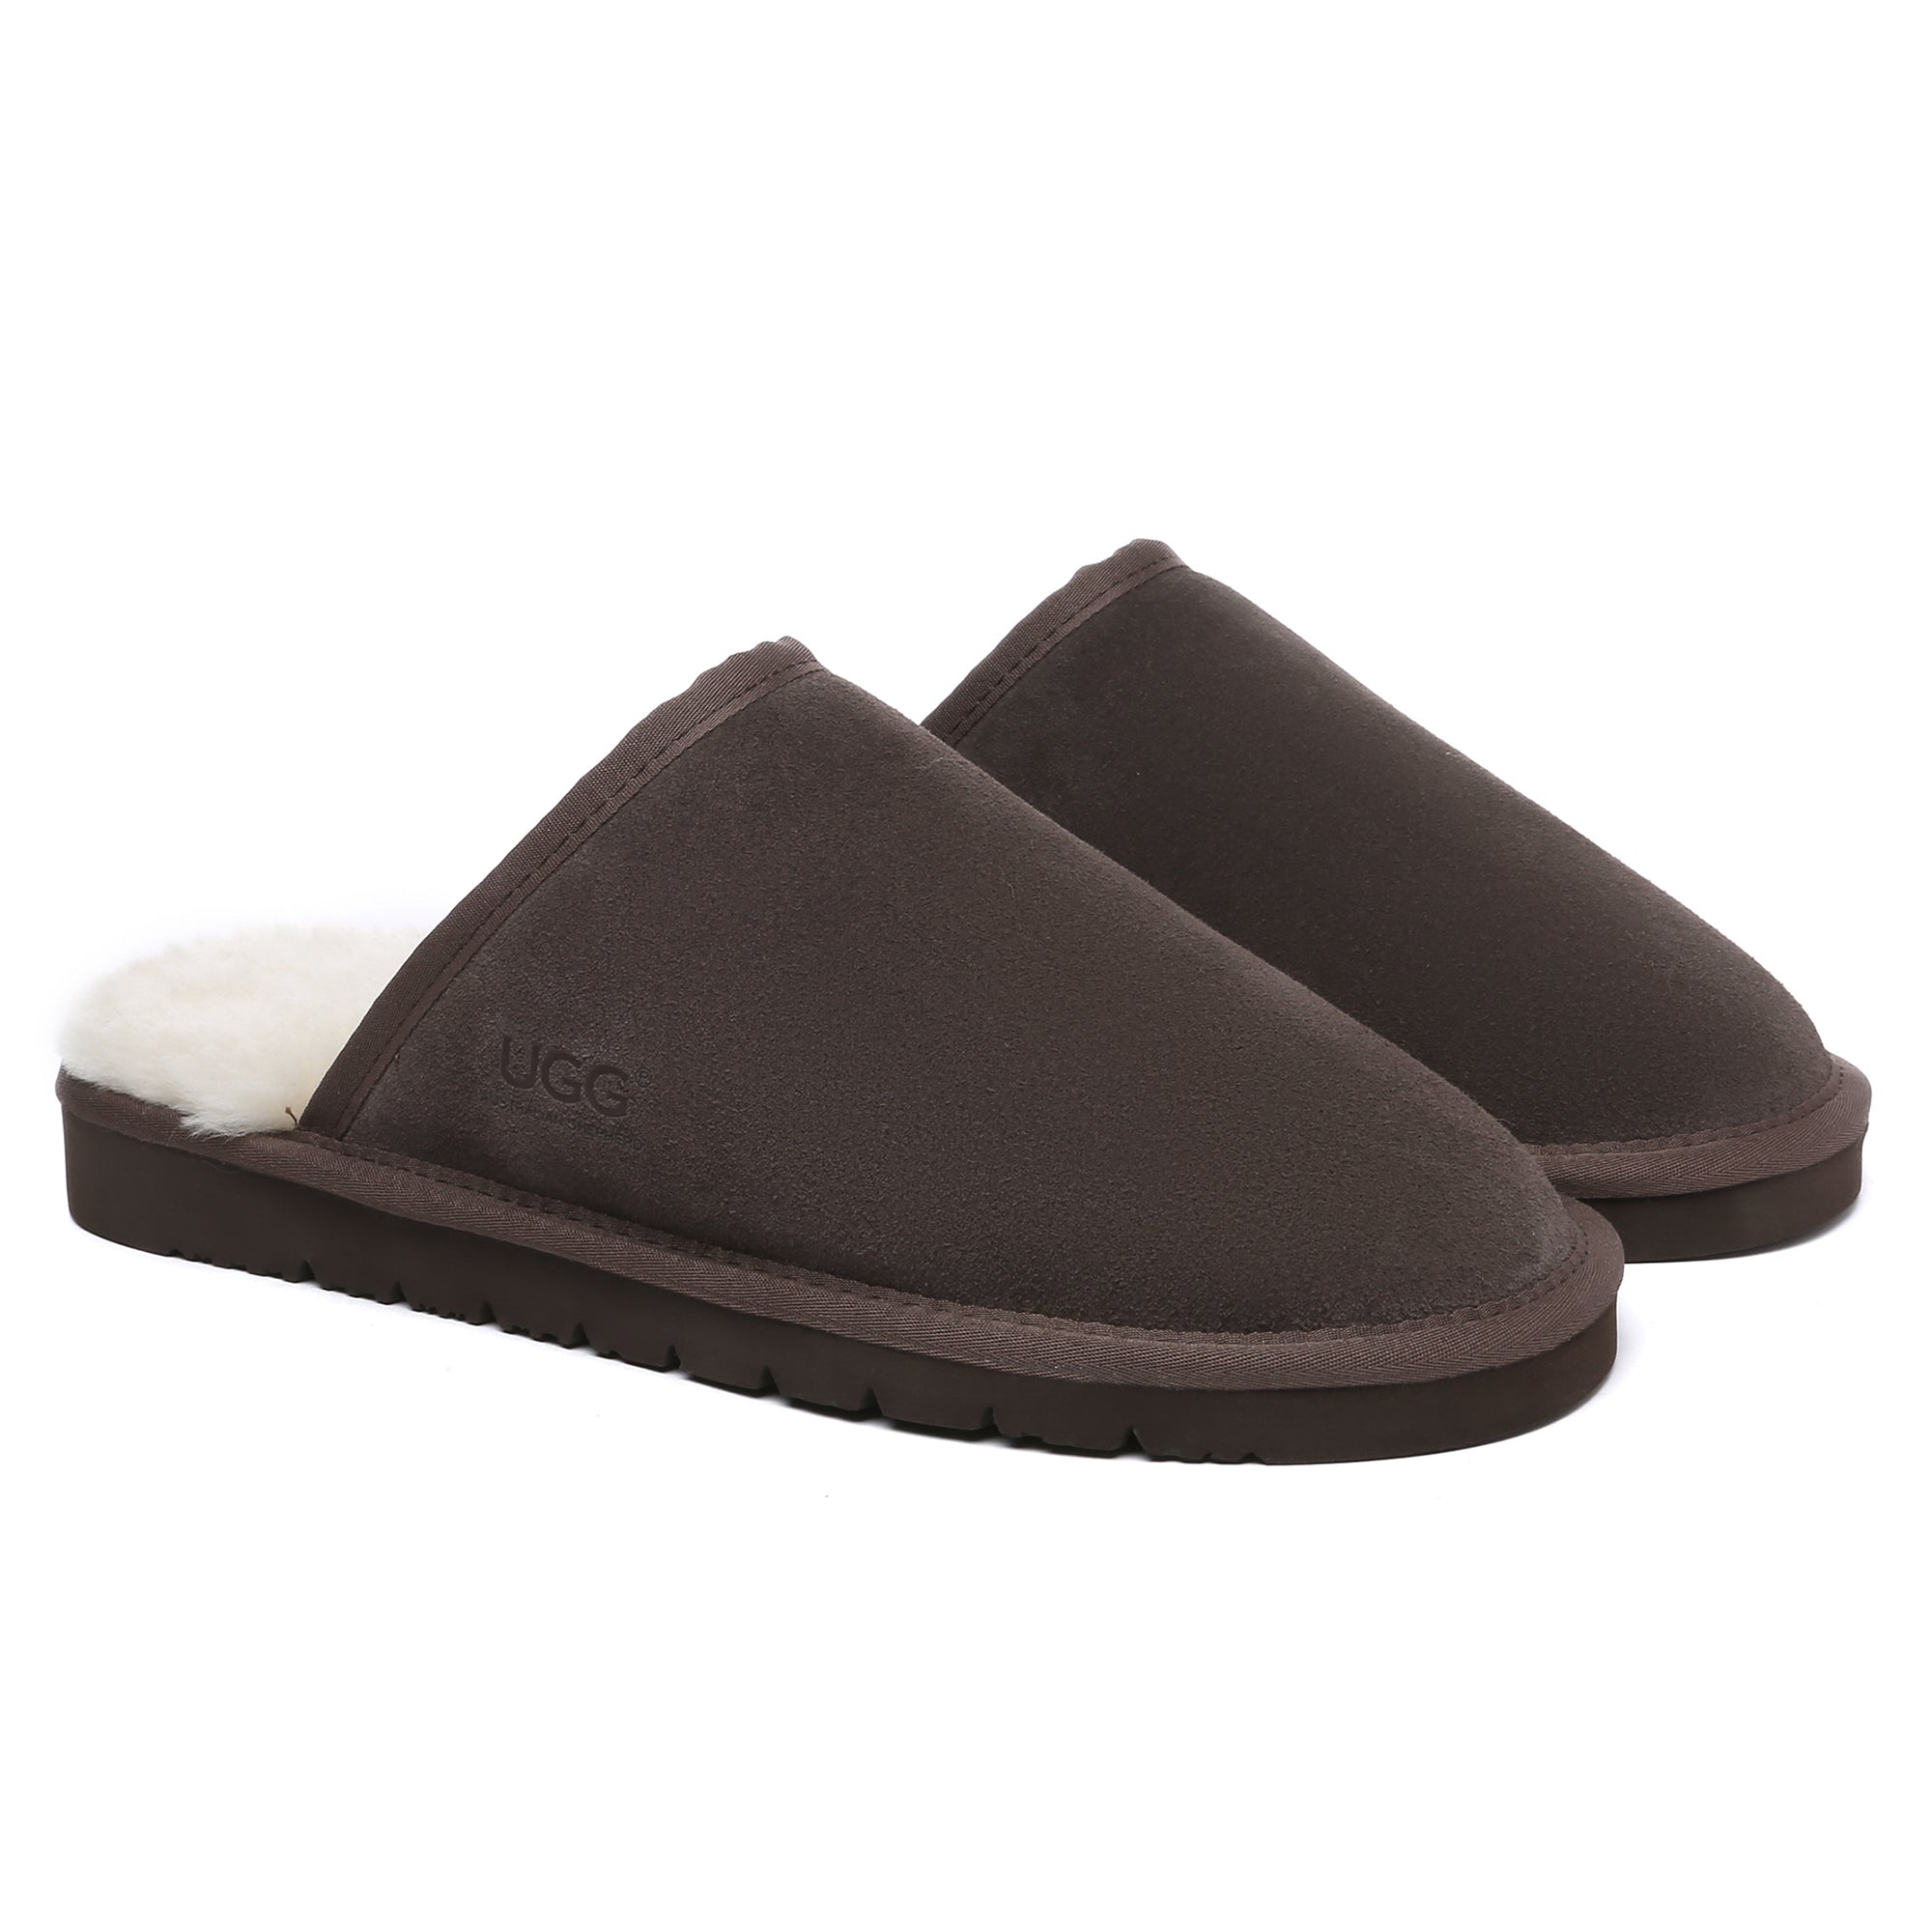 UGG Men Ultra Comfort Sole Slippers